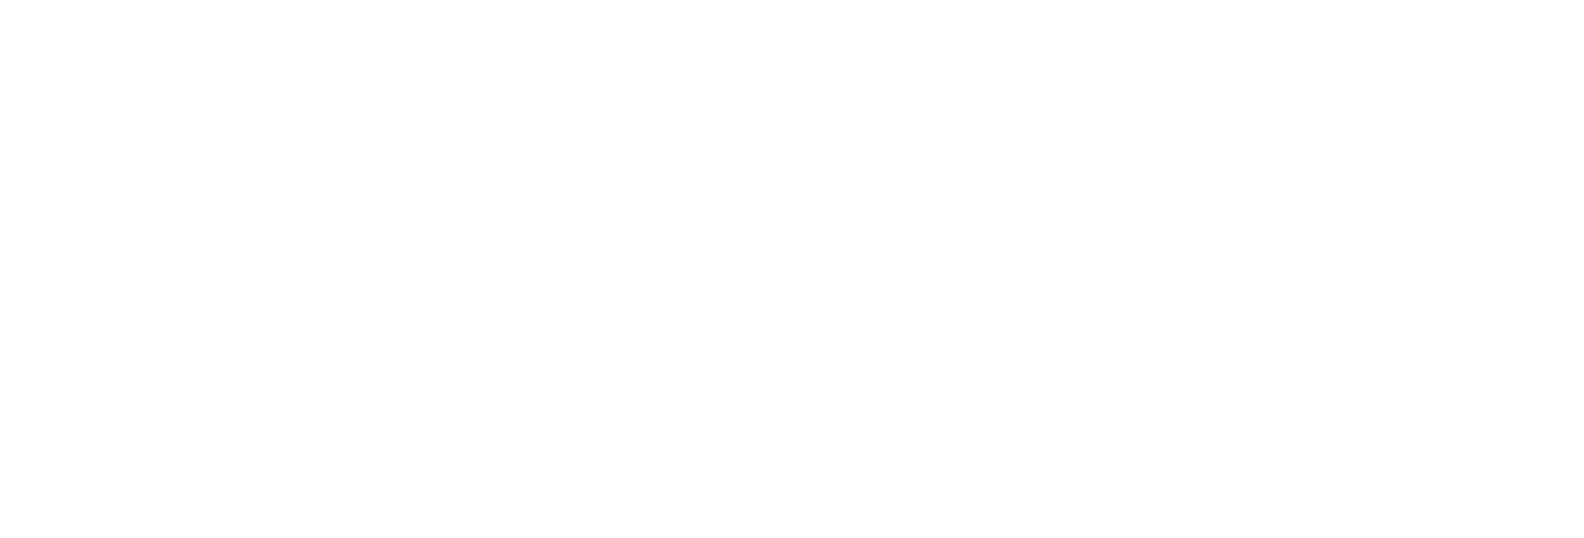 Rithm Capital Logo groß für dunkle Hintergründe (transparentes PNG)